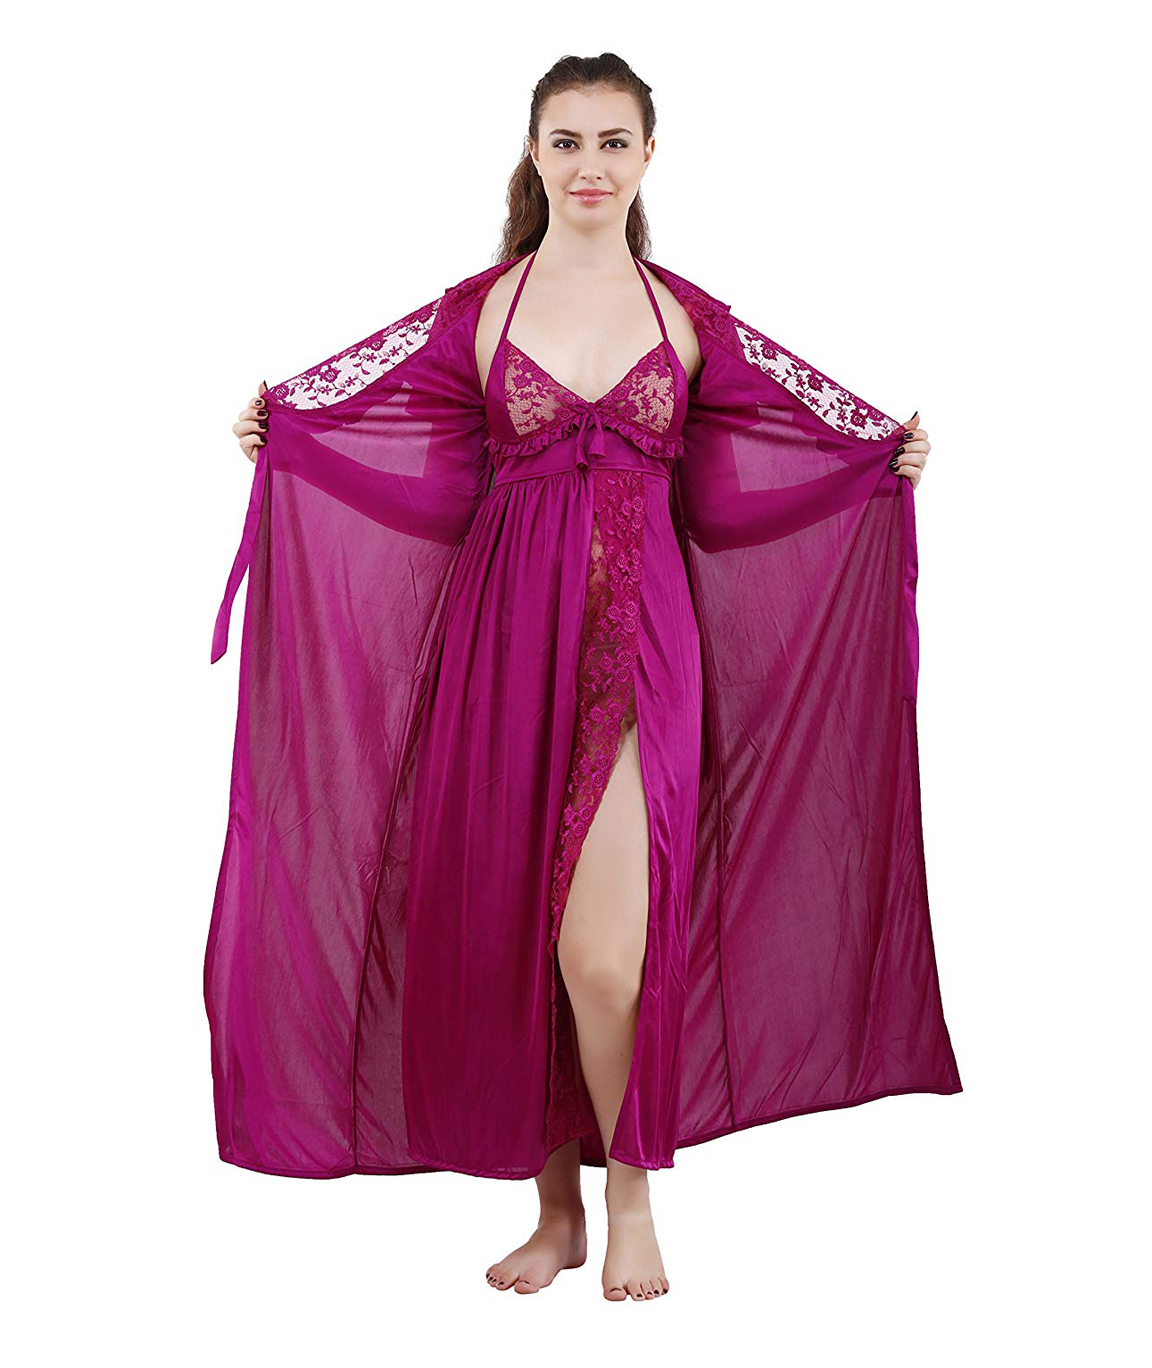 Womens Night Suit Set On Amazon,महिलाओं द्वारा काफी पसंद की जा रही हैं ये Night  Suit, रात में मिलेगी सुकून की नींद - these are most popular and best womens night  suit